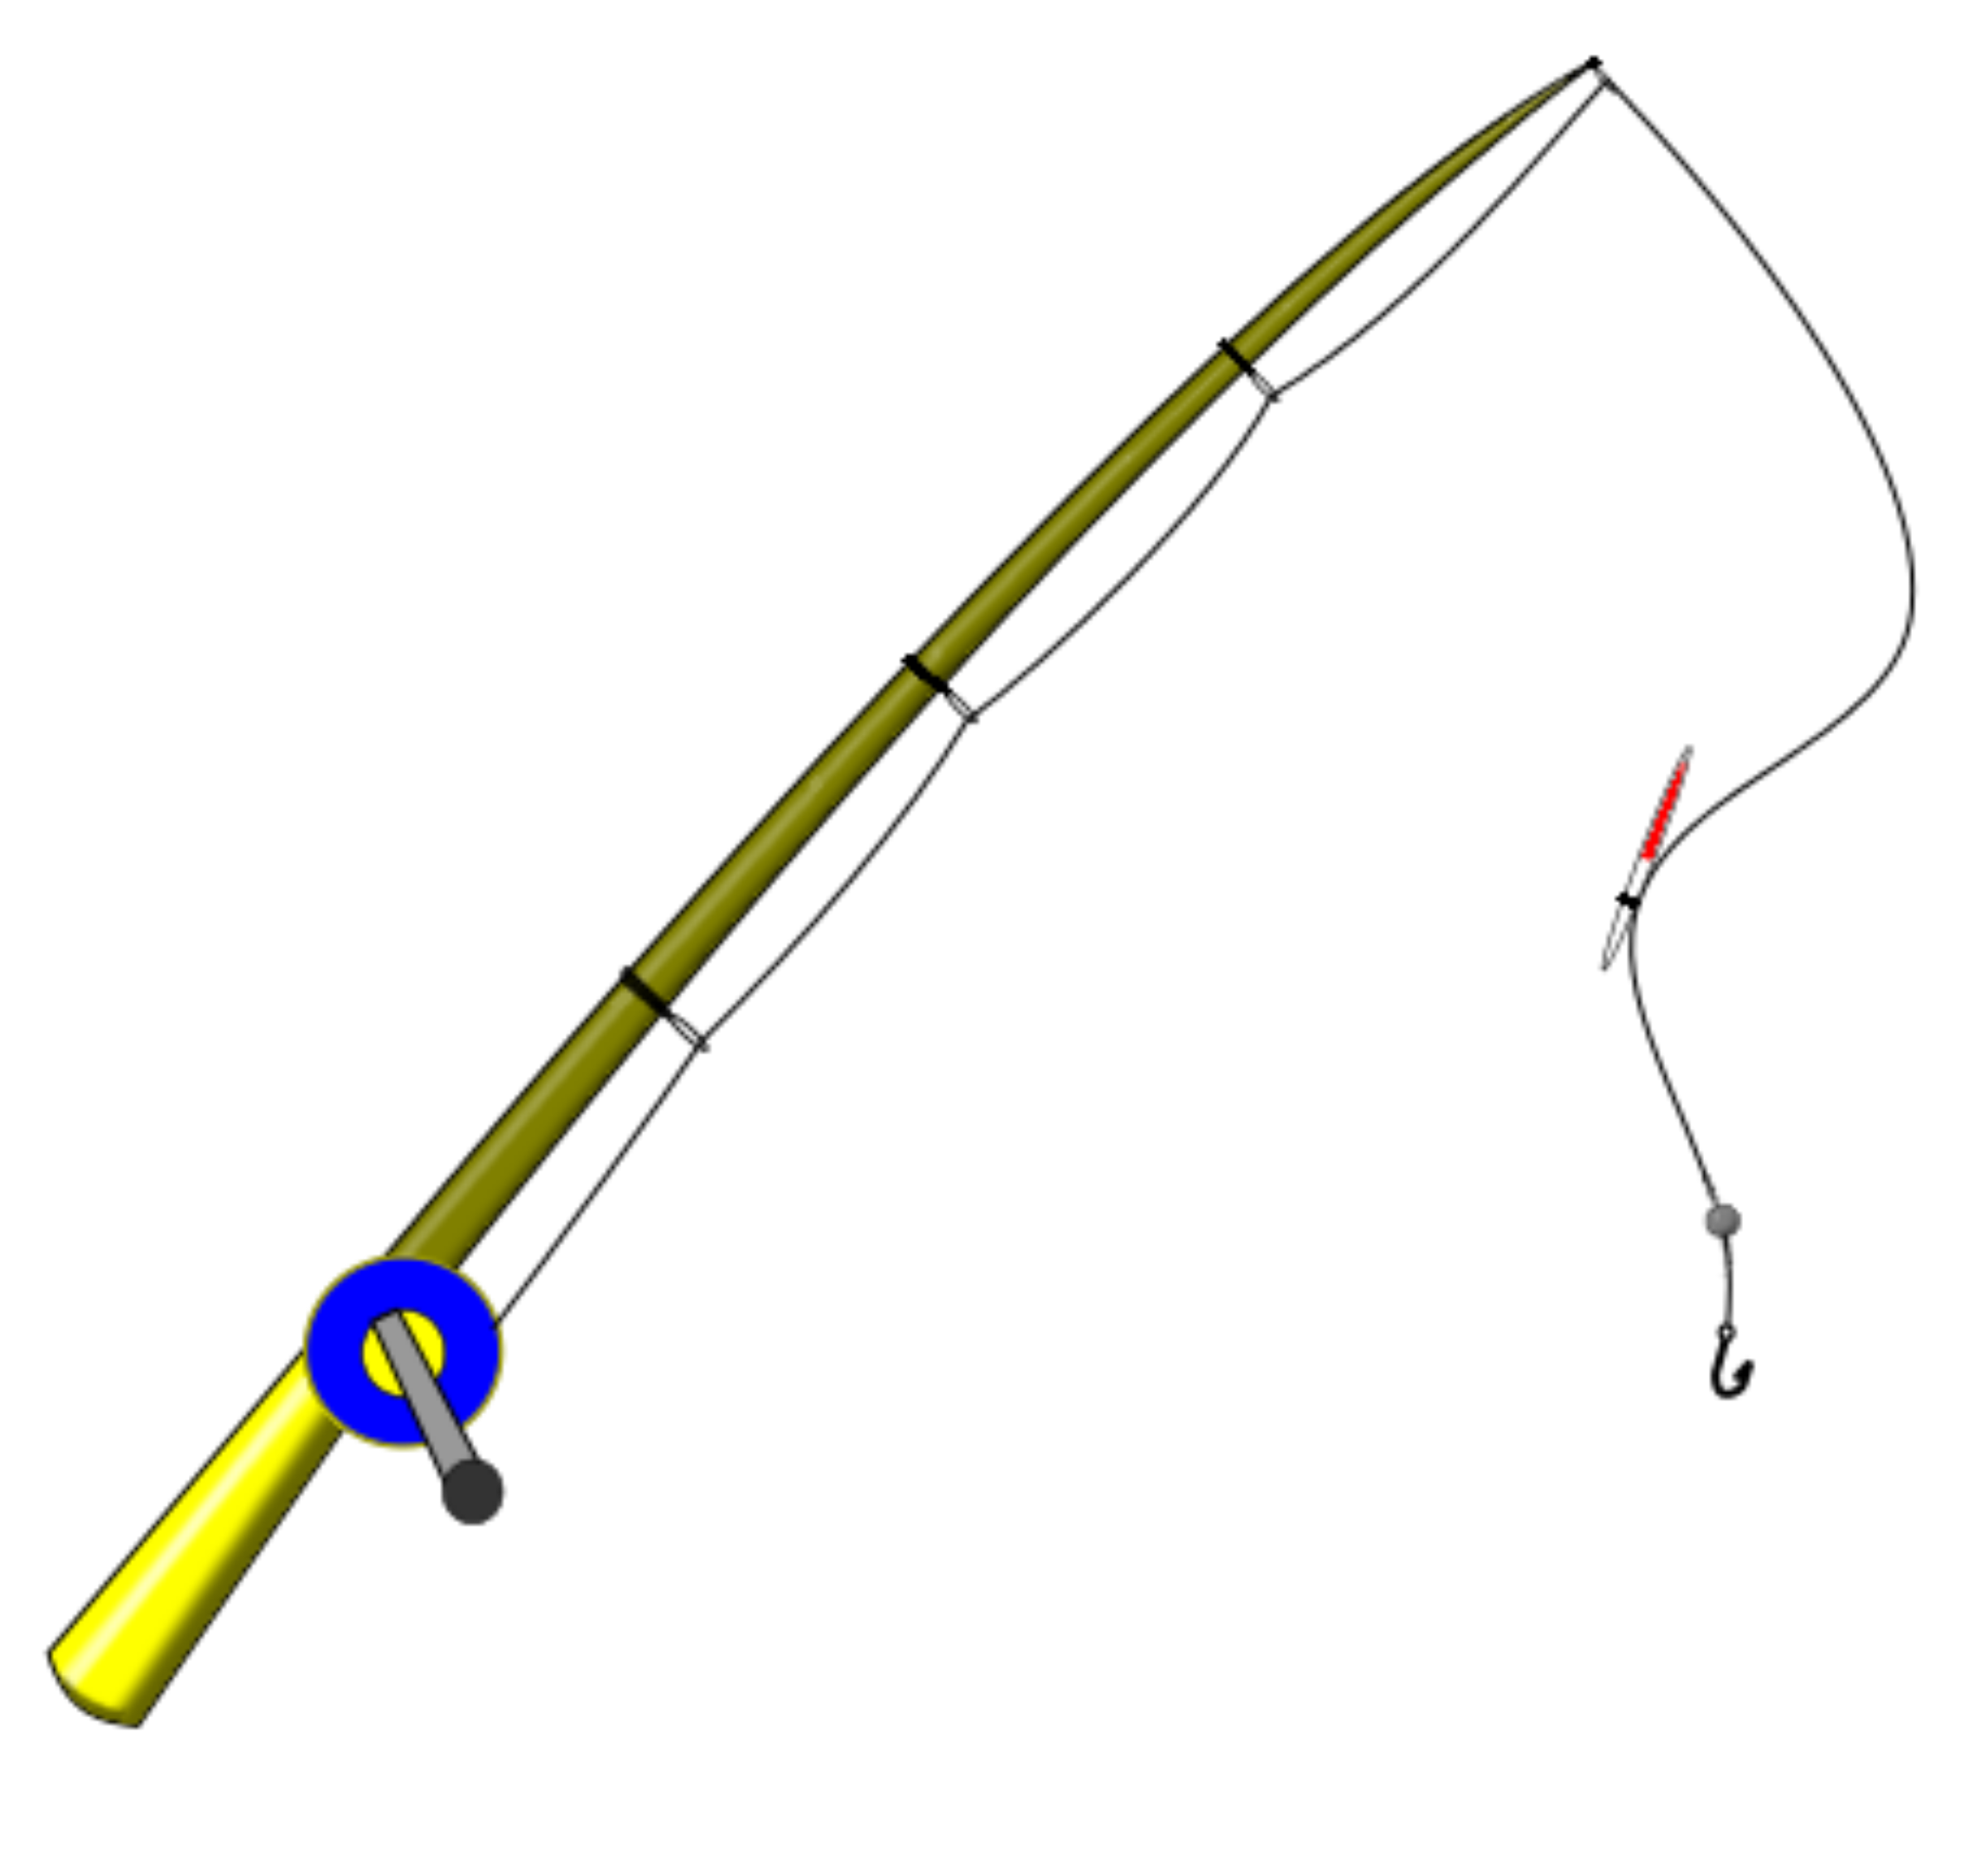 Fishing pole clipart fishing rod image 2 - Clipartix